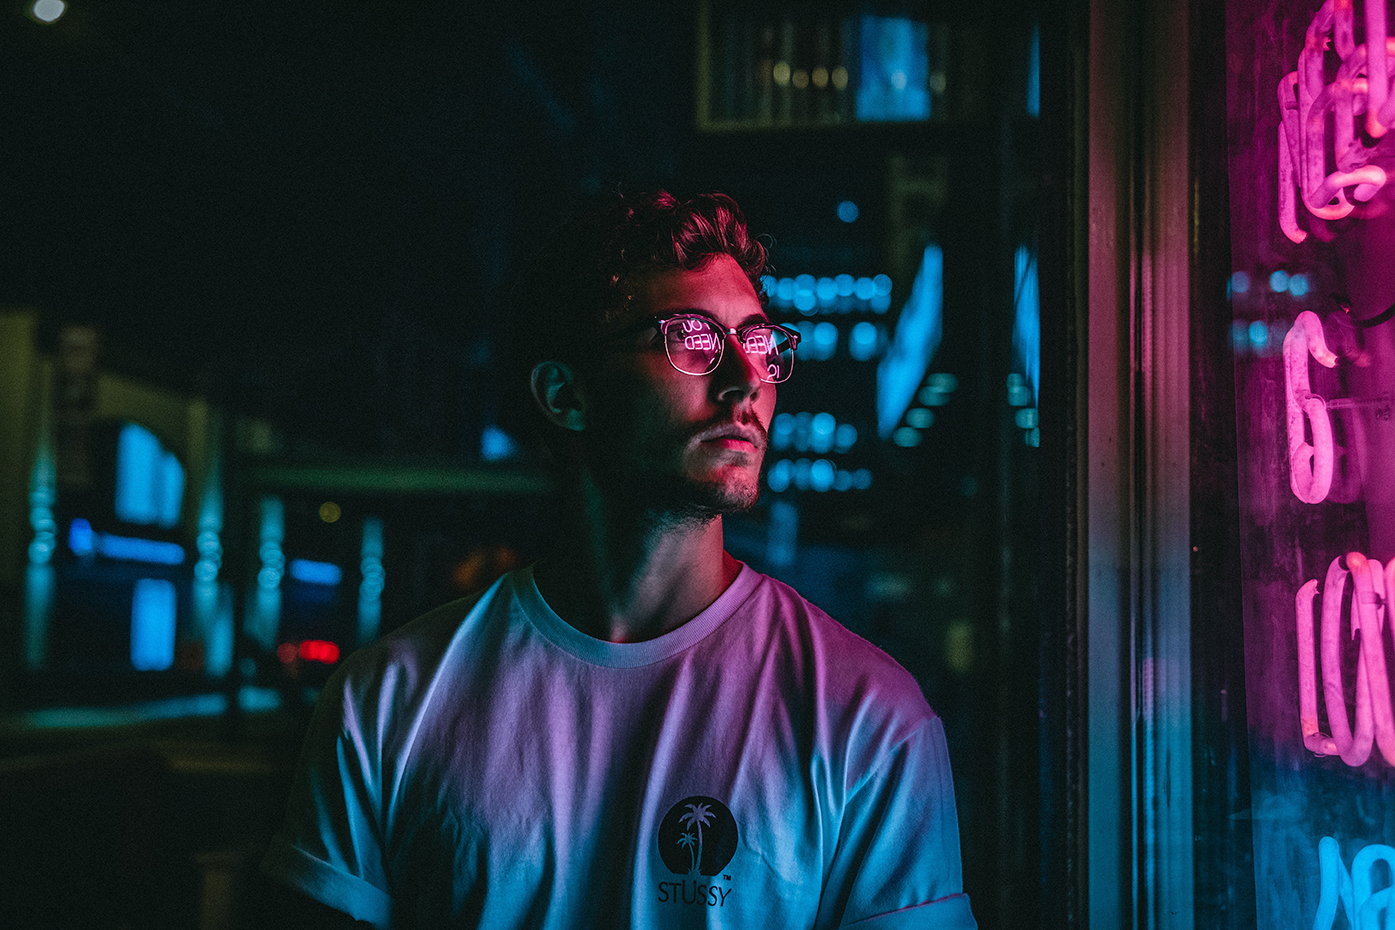 guy in front of neon lights